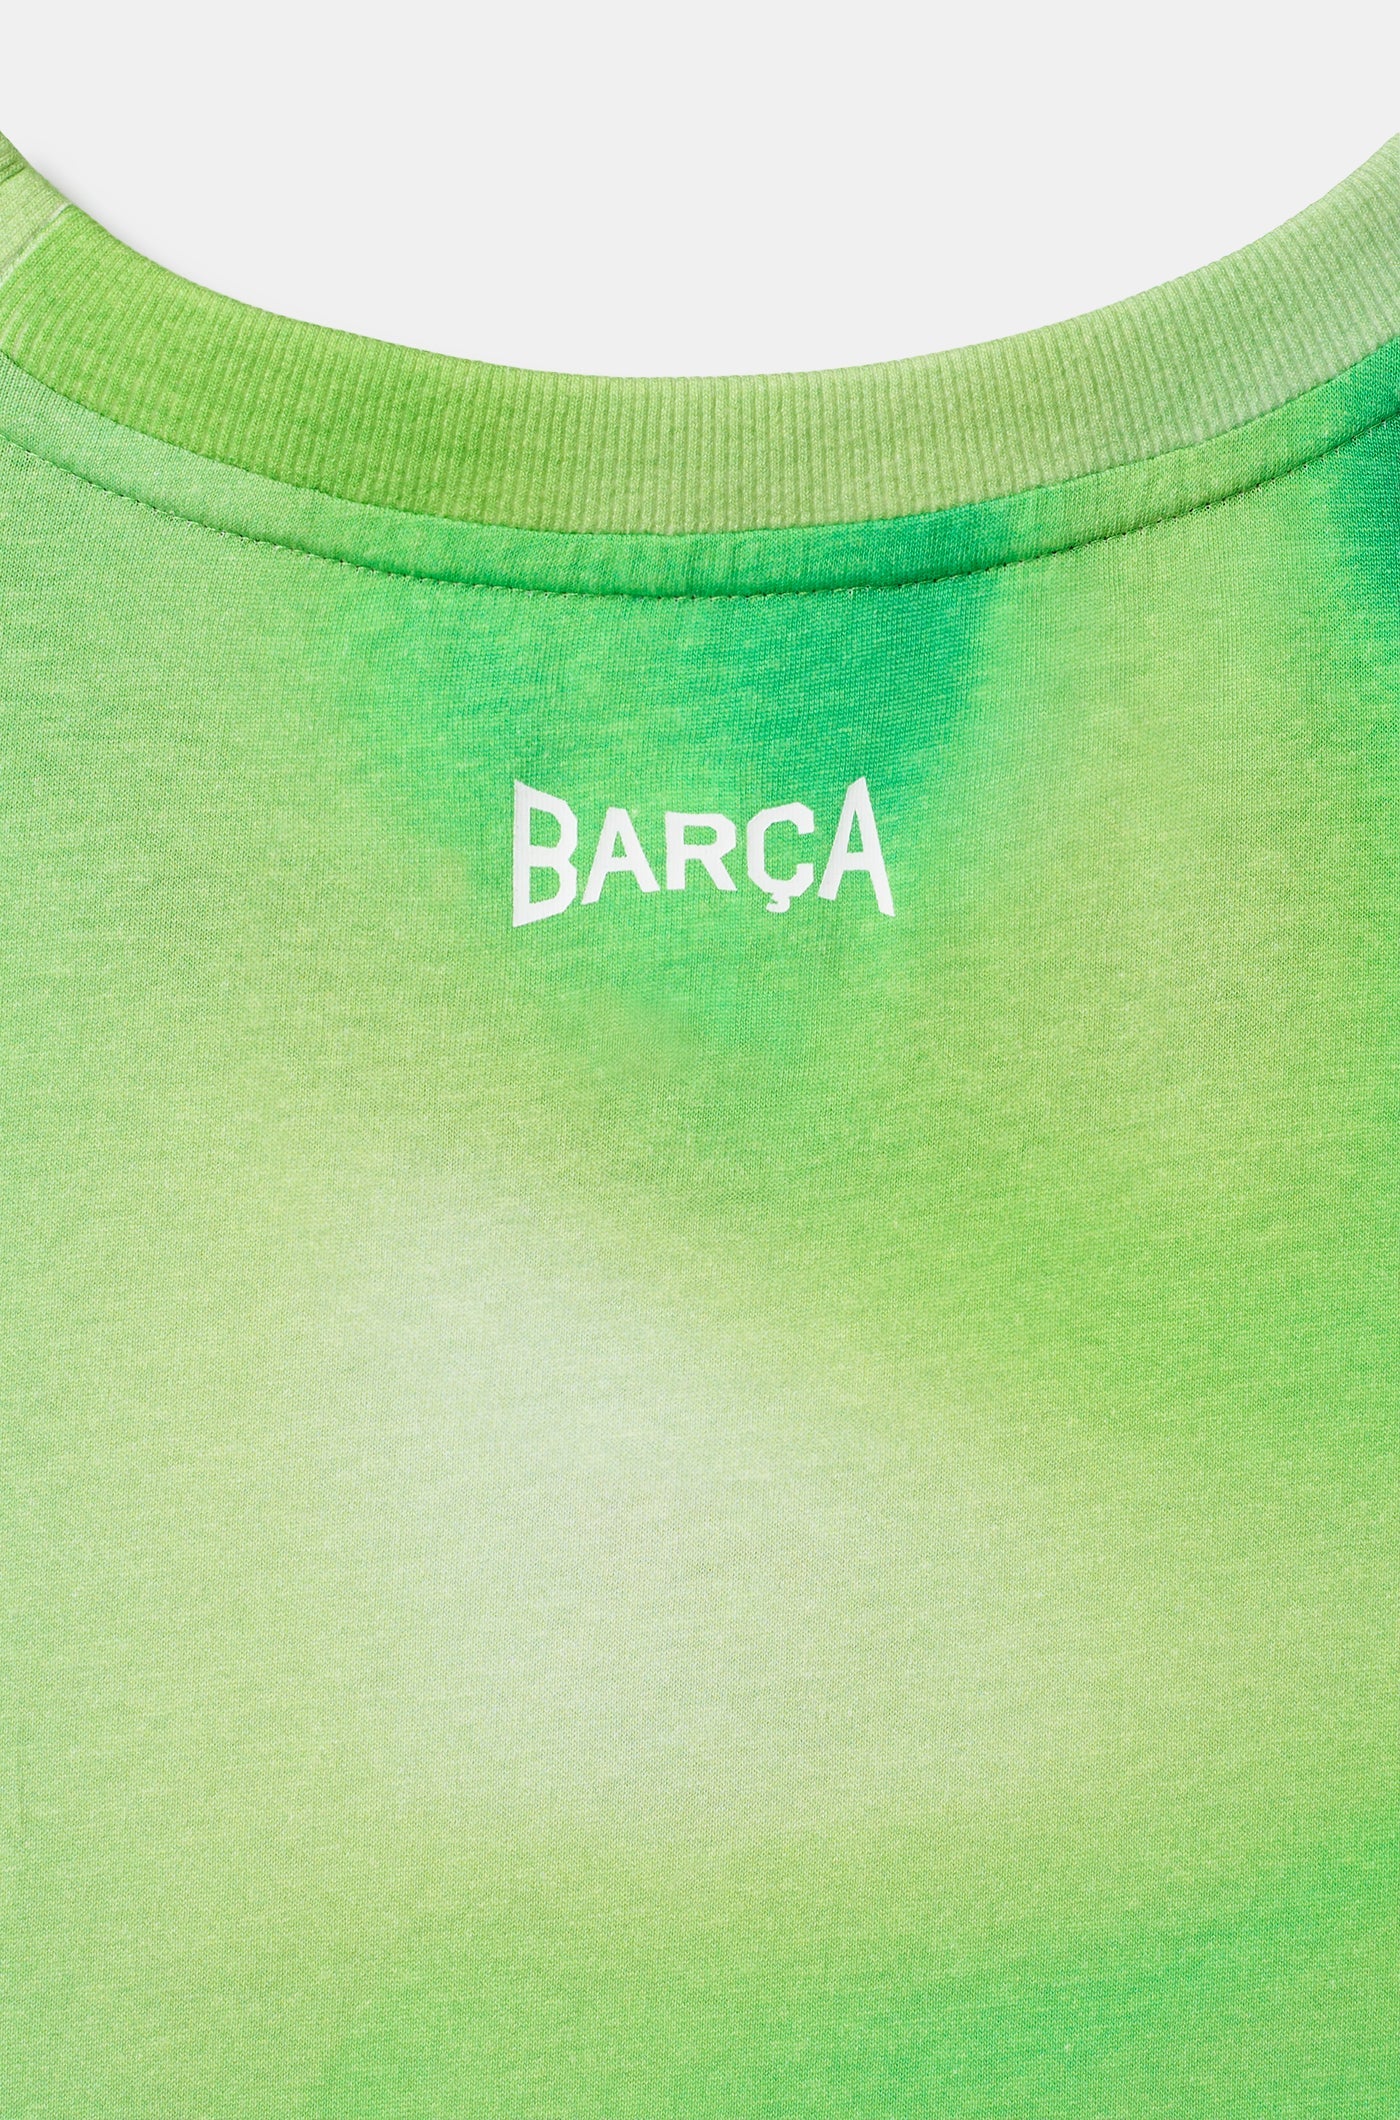 Débardeur vert Barça - Femme